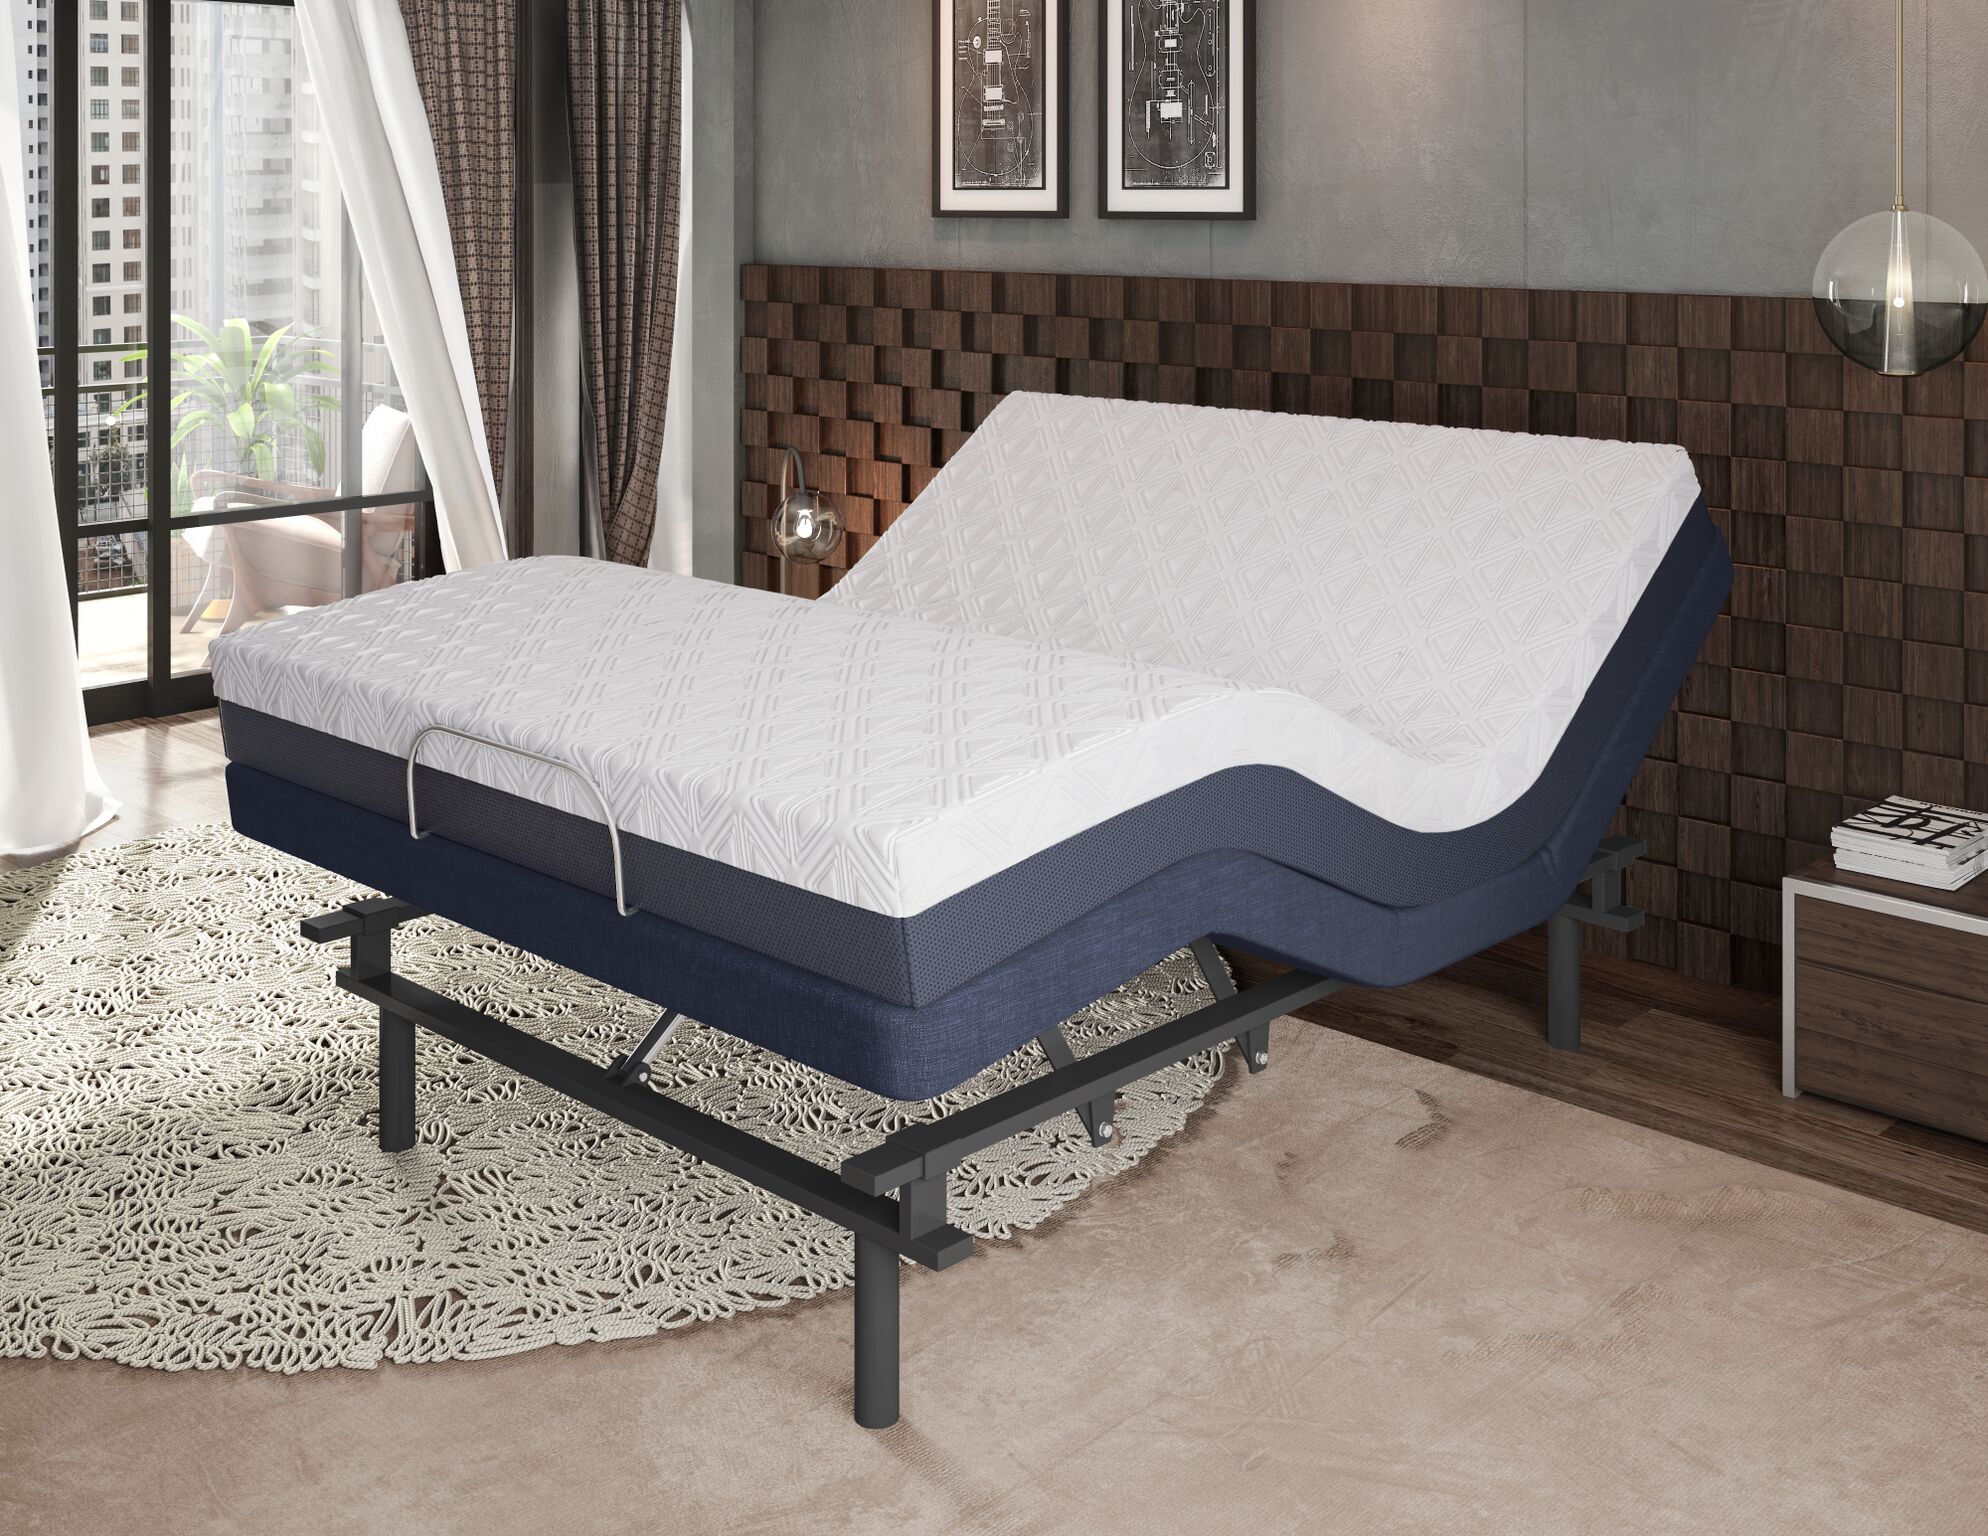 bed mattresses grand forks nd